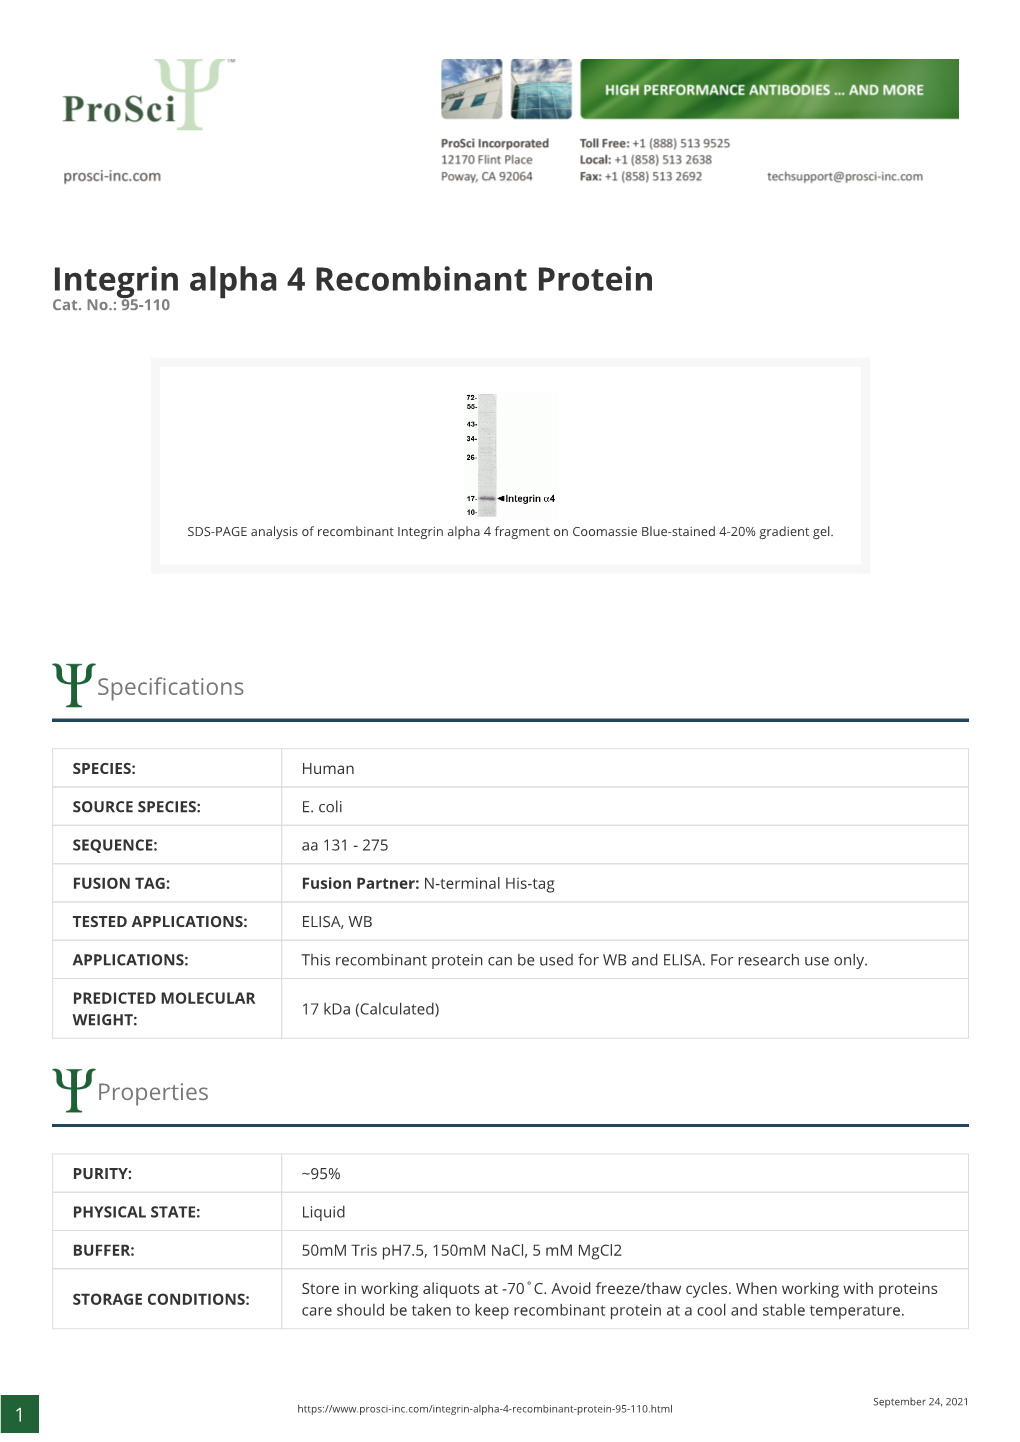 Integrin Alpha 4 Recombinant Protein Cat